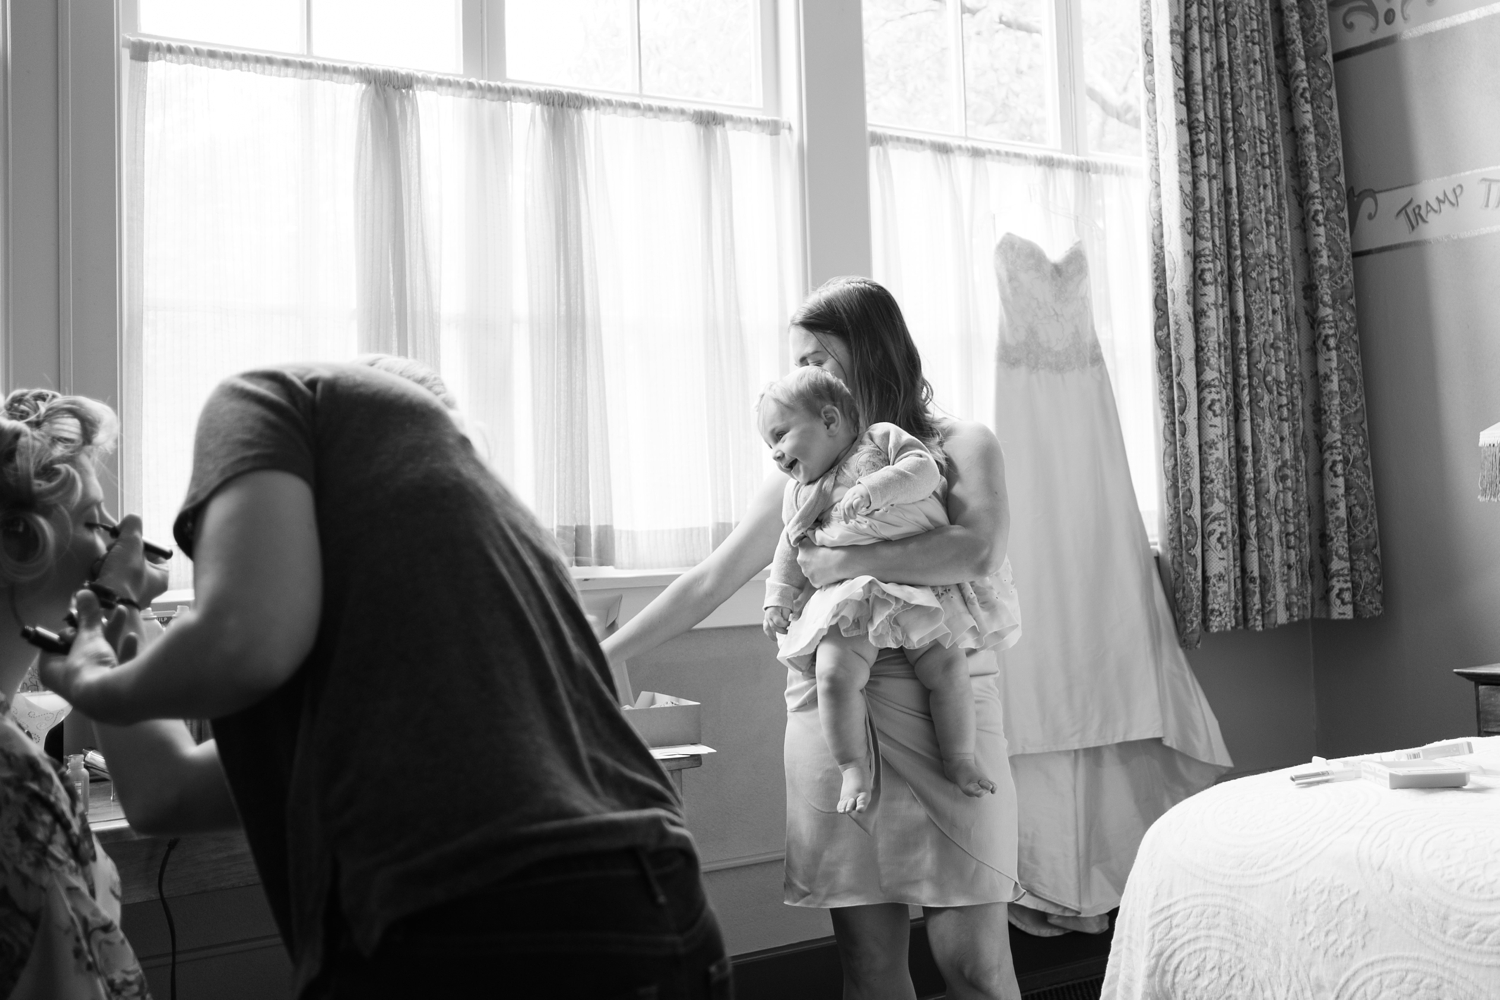 Getting ready by Portland documentary wedding photographer Alison Smith Thistledown Photography